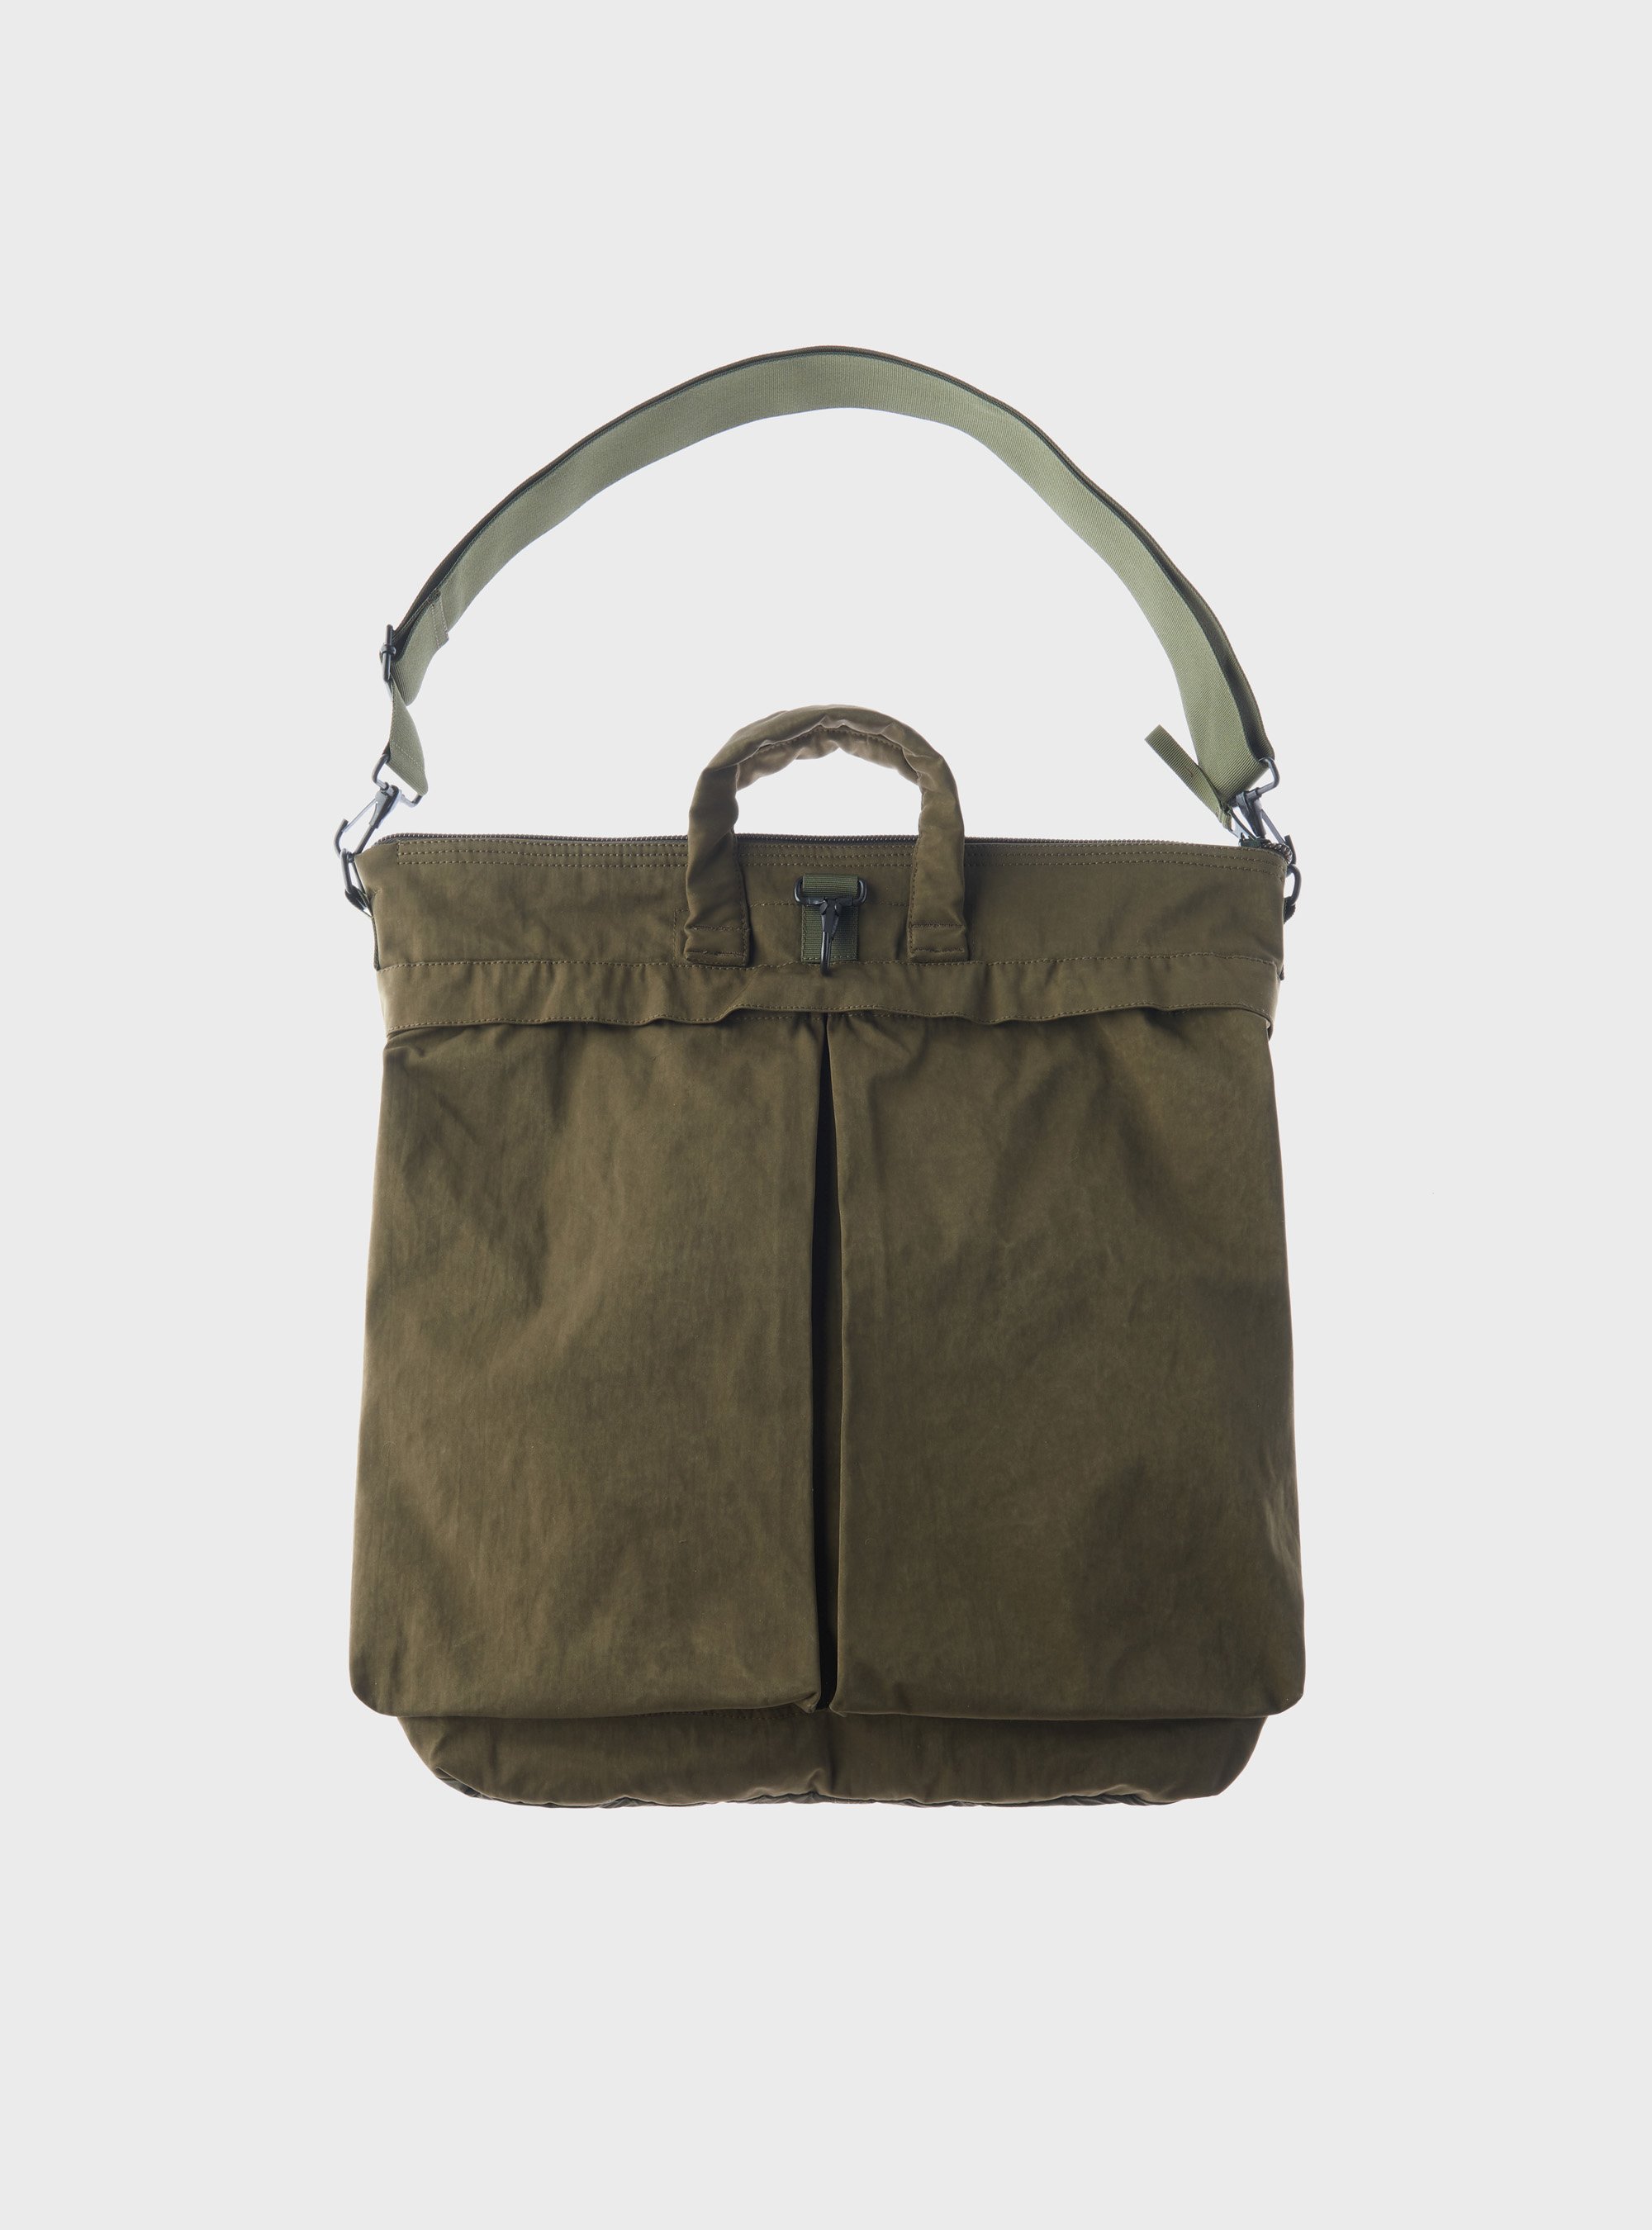 Ben 10, 5D embossed big waterproof school bag red,green/multicolor eh634 :  Amazon.in: Fashion